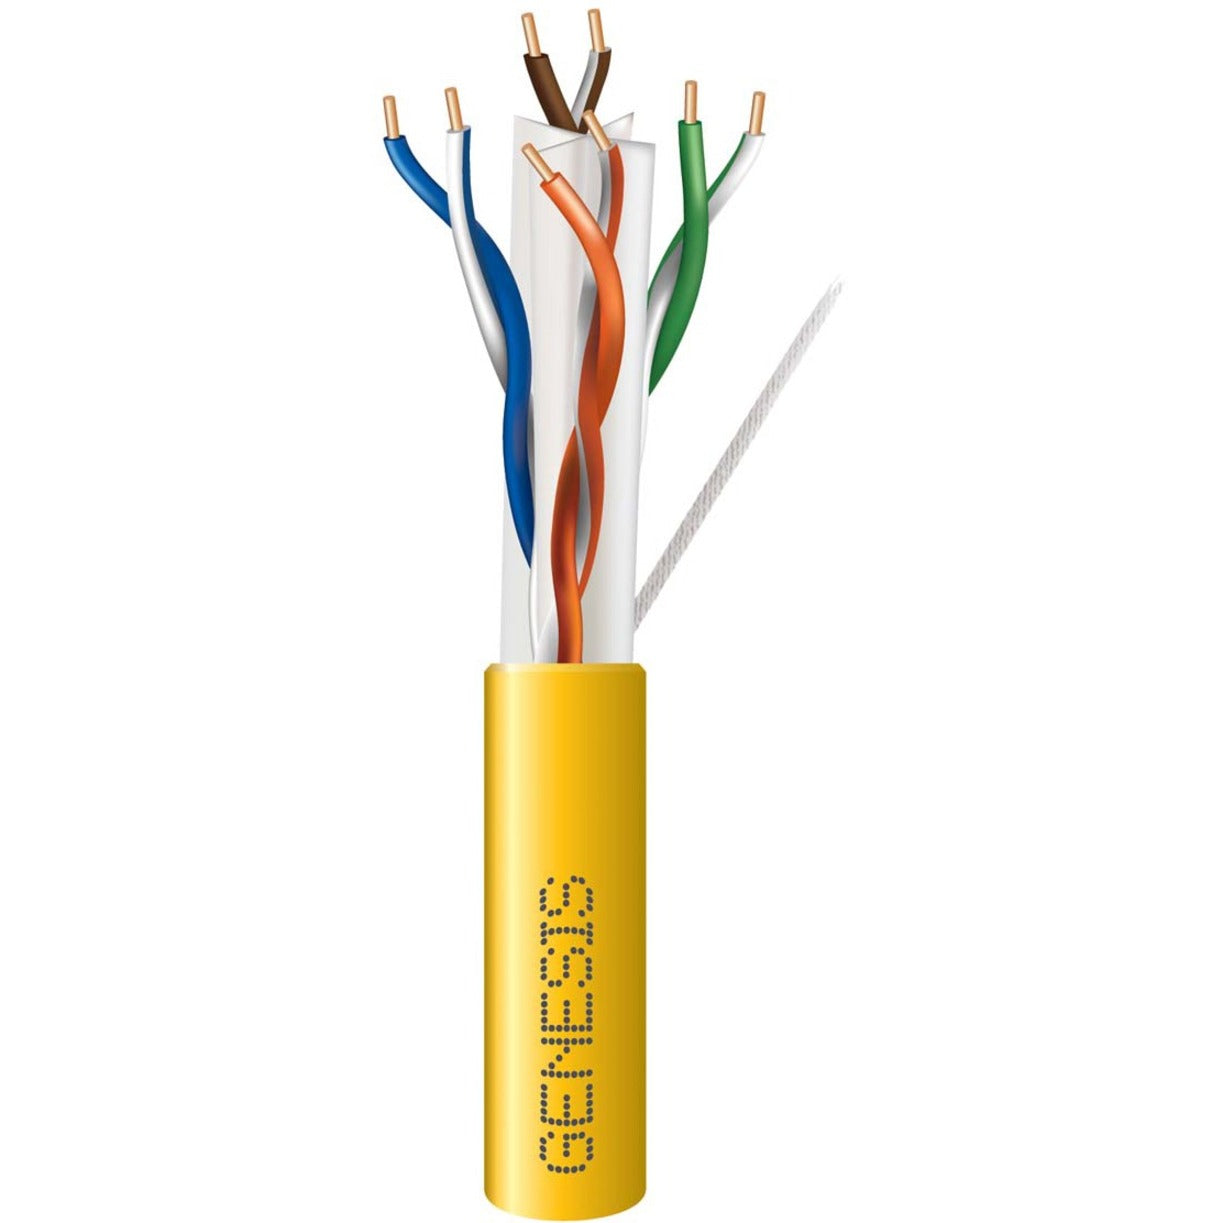 Genesis 50921102 Cat.6 UTP Network Cable, 1000 ft, Yellow, Power-sum Near End Crosstalk (PSNEXT), Minimized Near-End Crosstalk (NEXT), Sunlight Resistant, Stranded